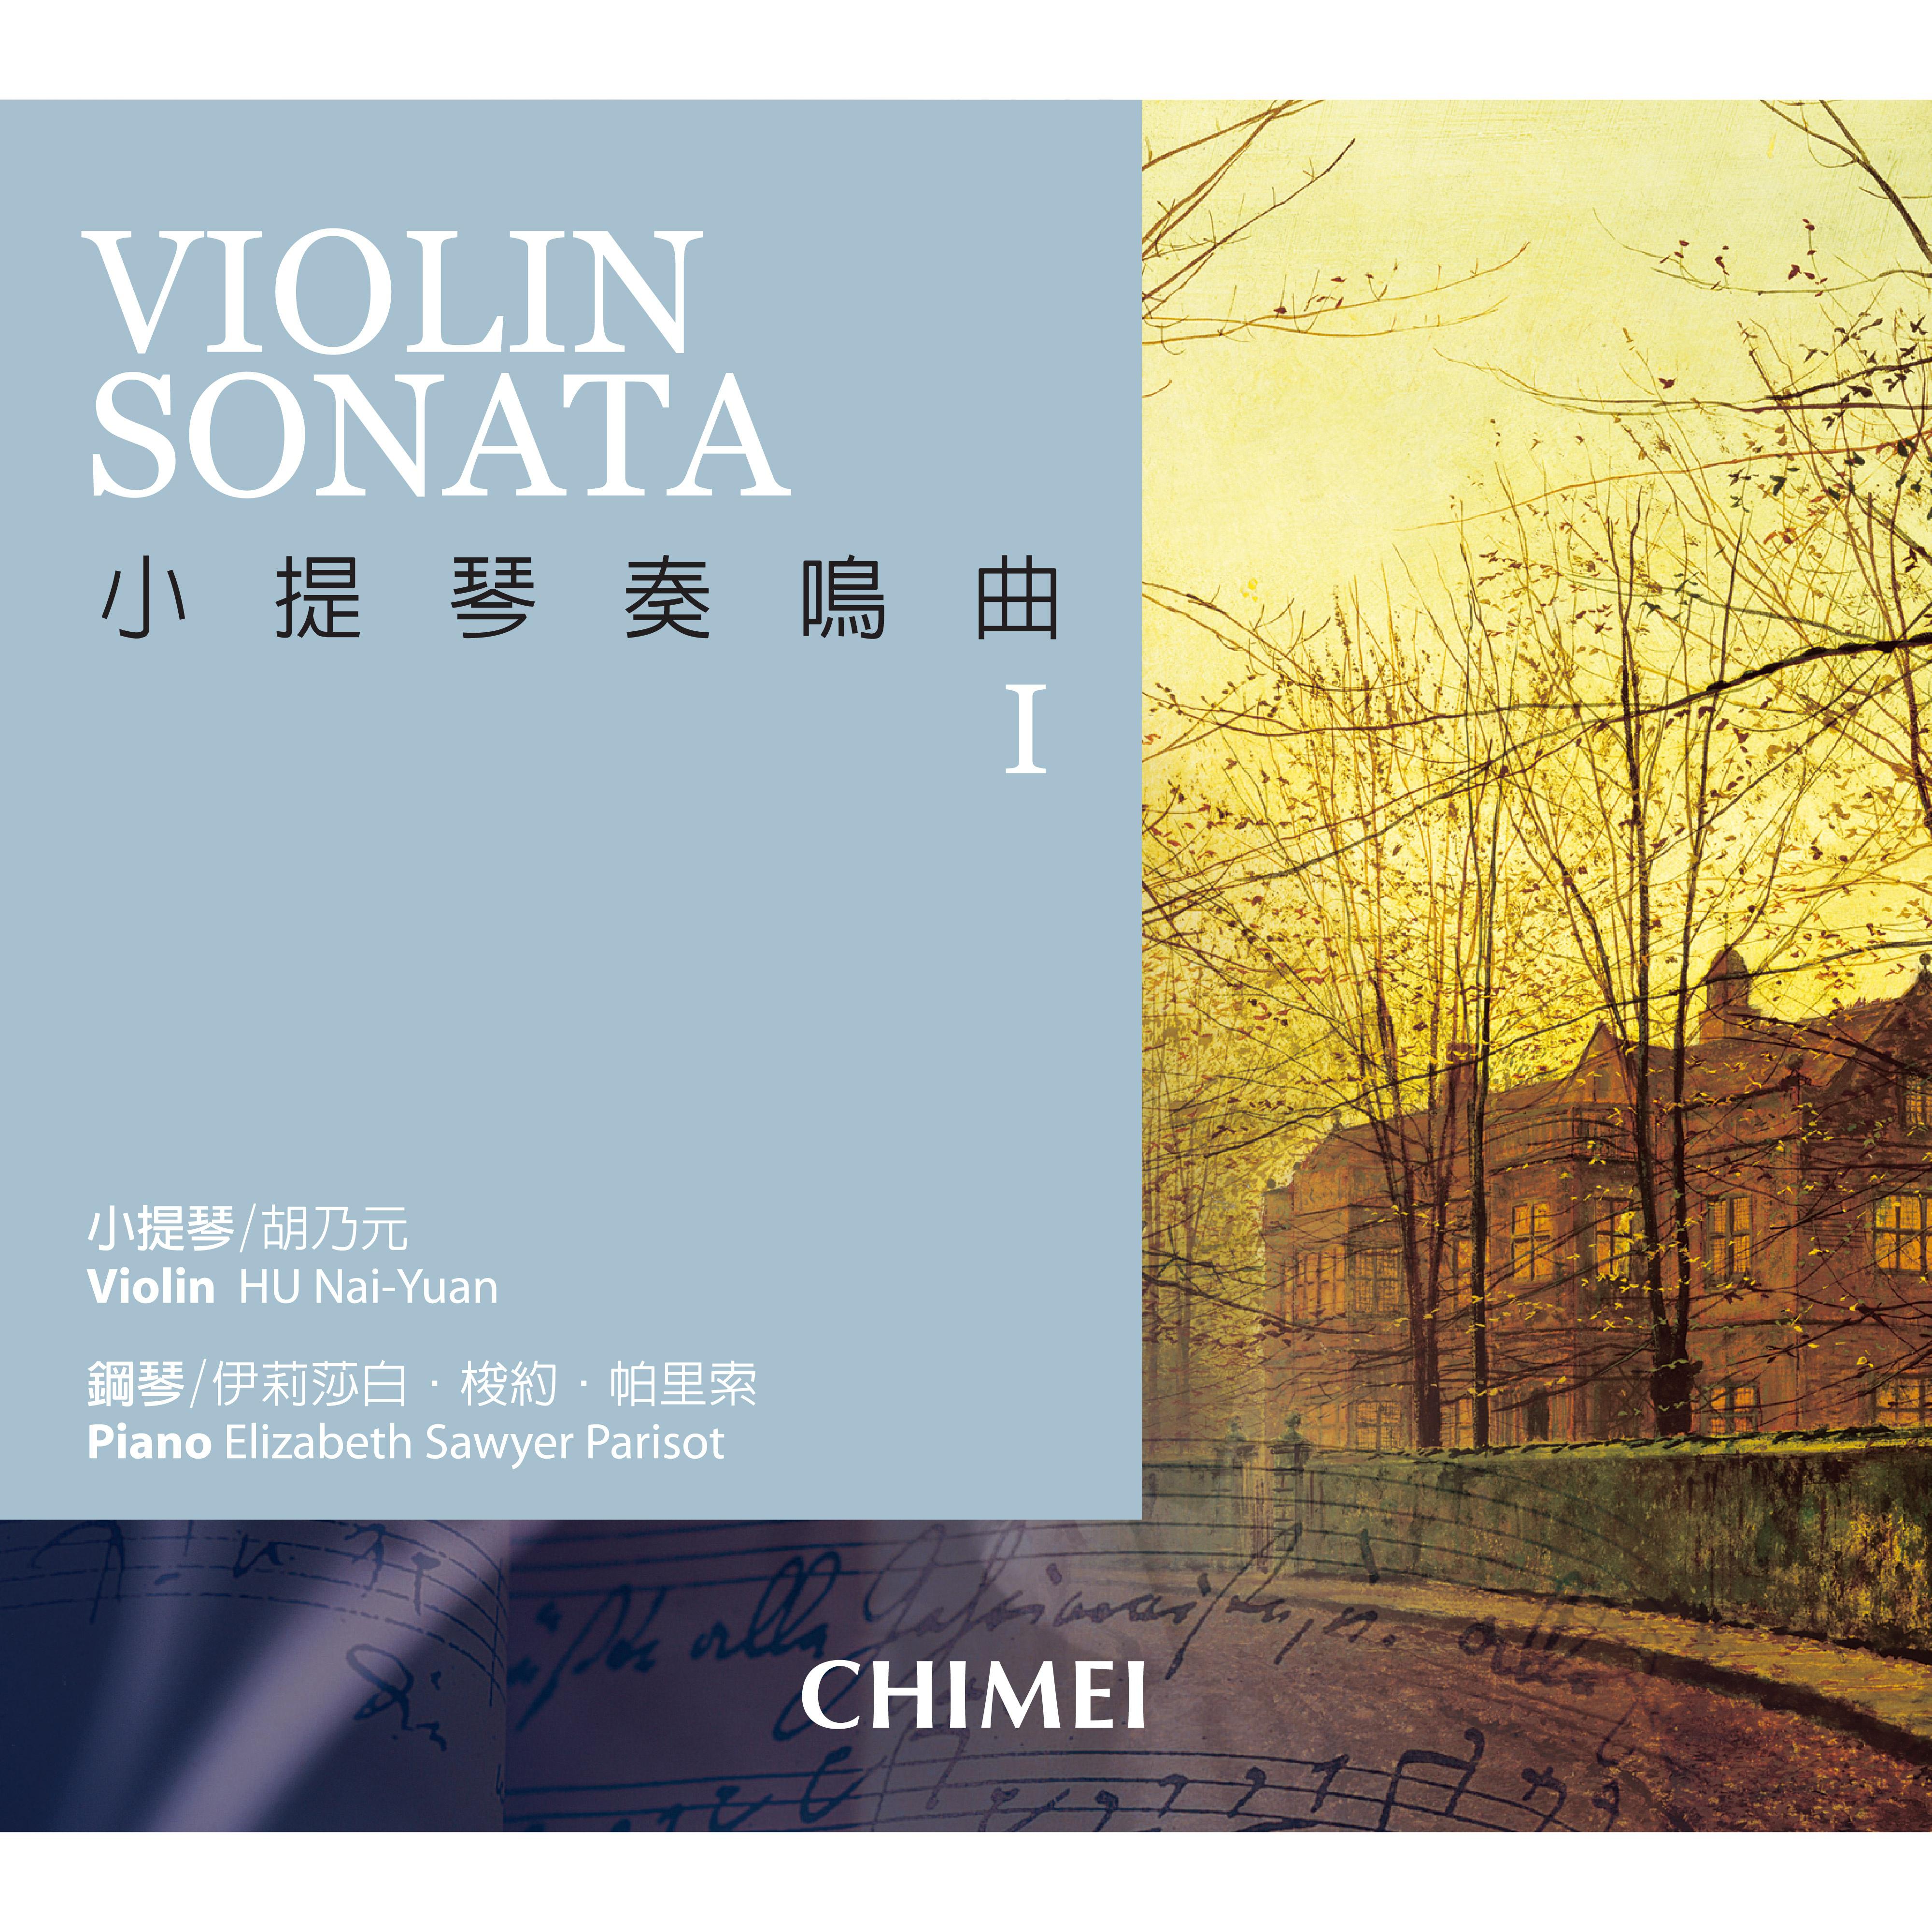 Handel: Sonata for Violin and Basso Continuo in D Major, HWV 371: . Allegro